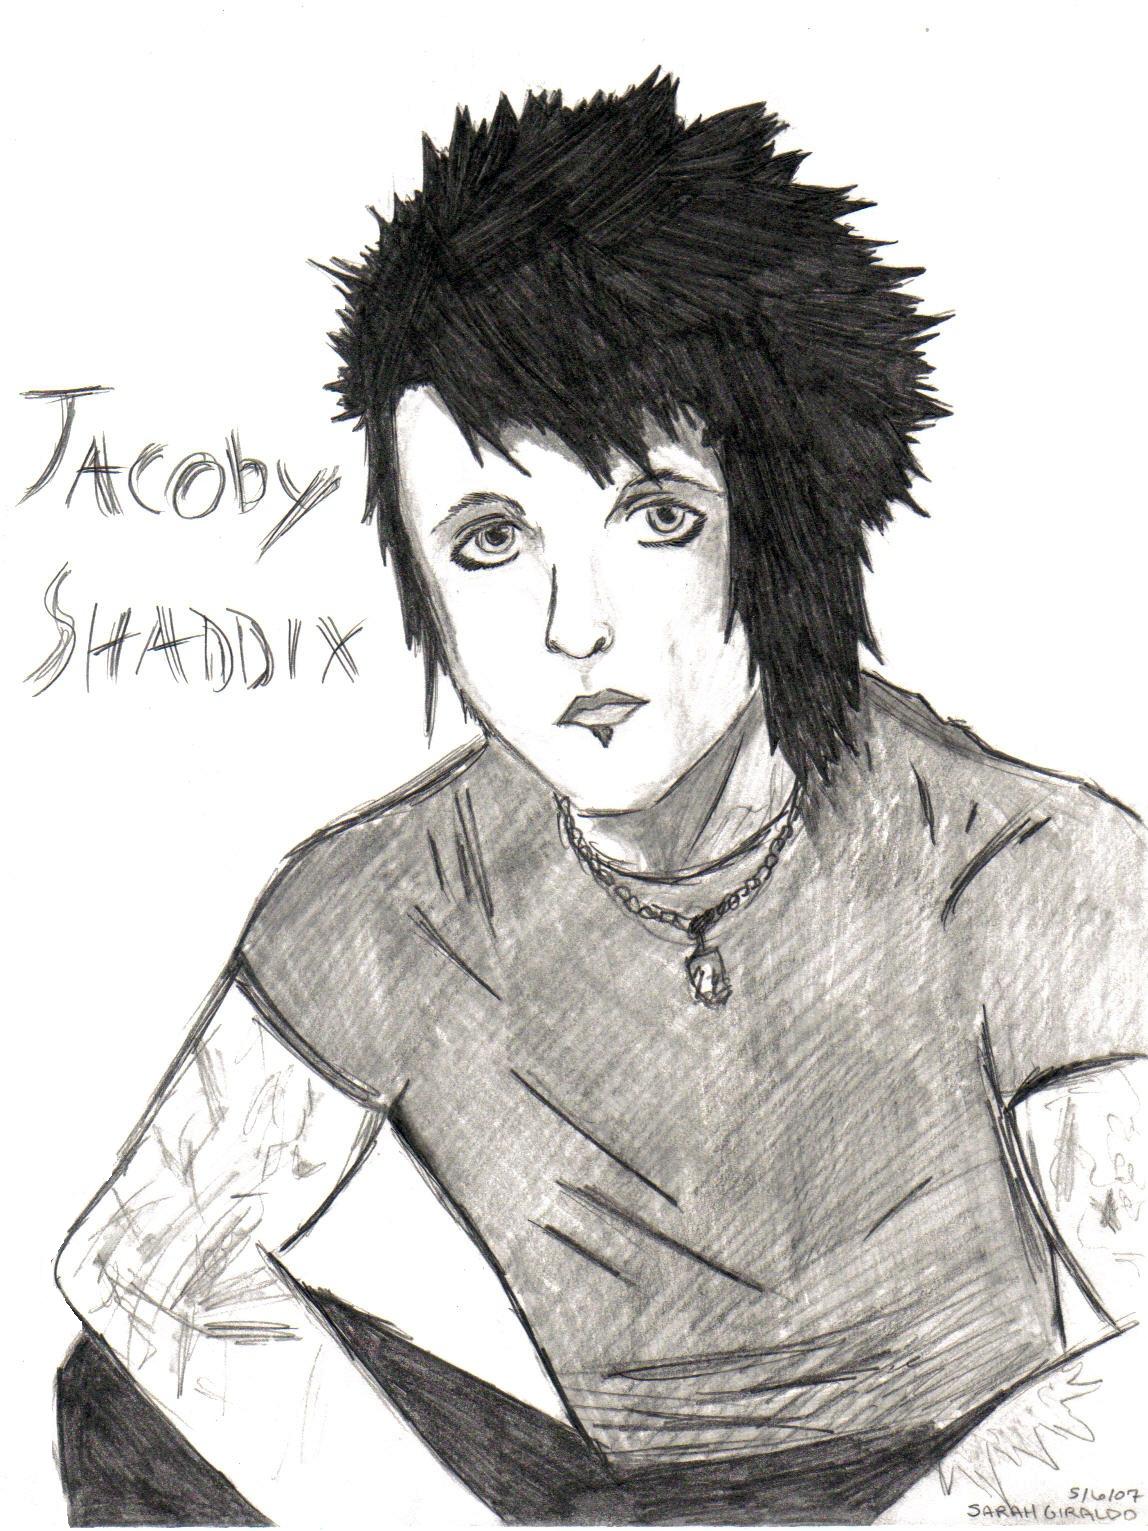 Jacoby Shaddix by kewl_kitsune_26